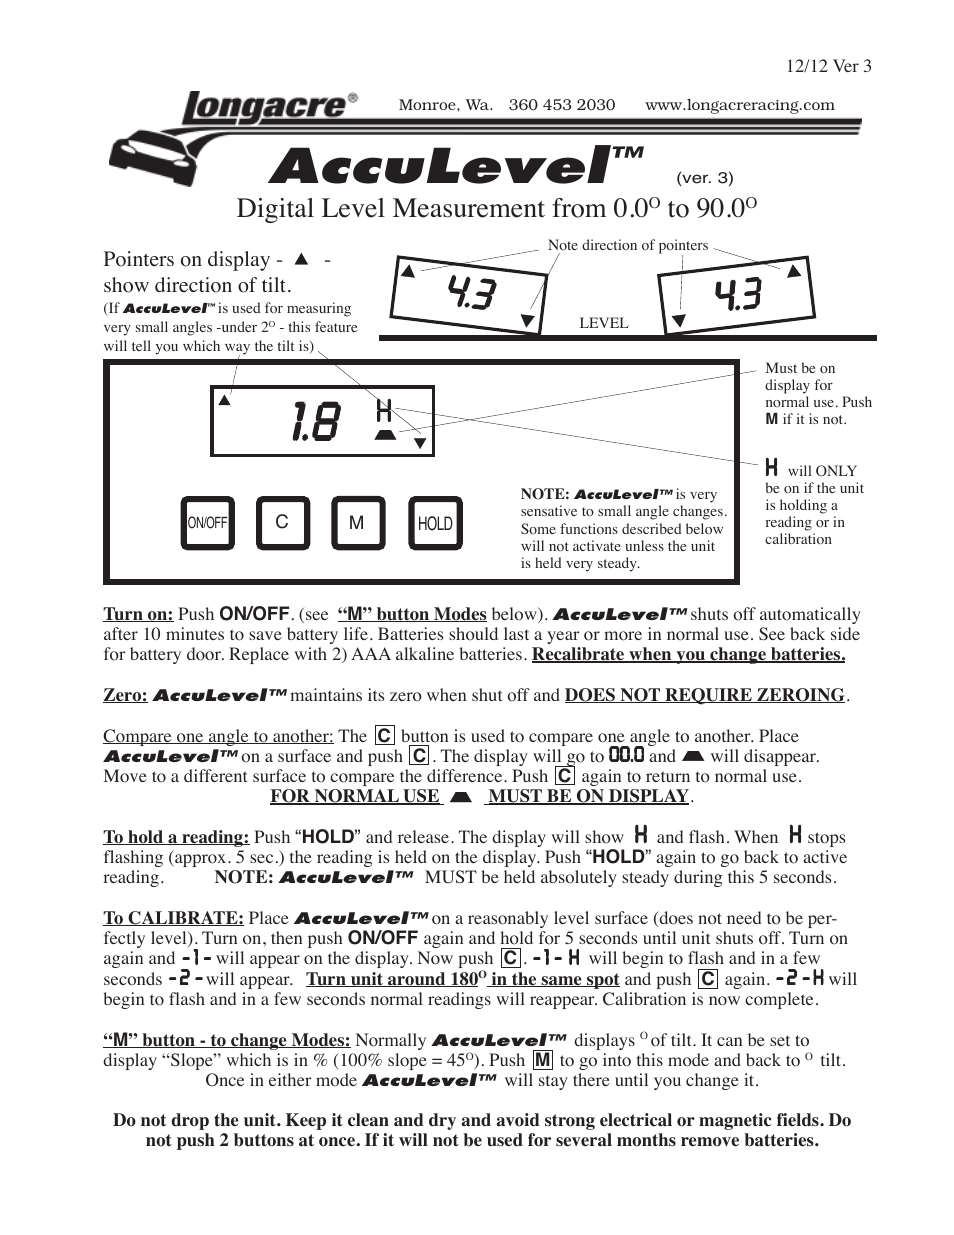 78310 AccuLevel (version 3)